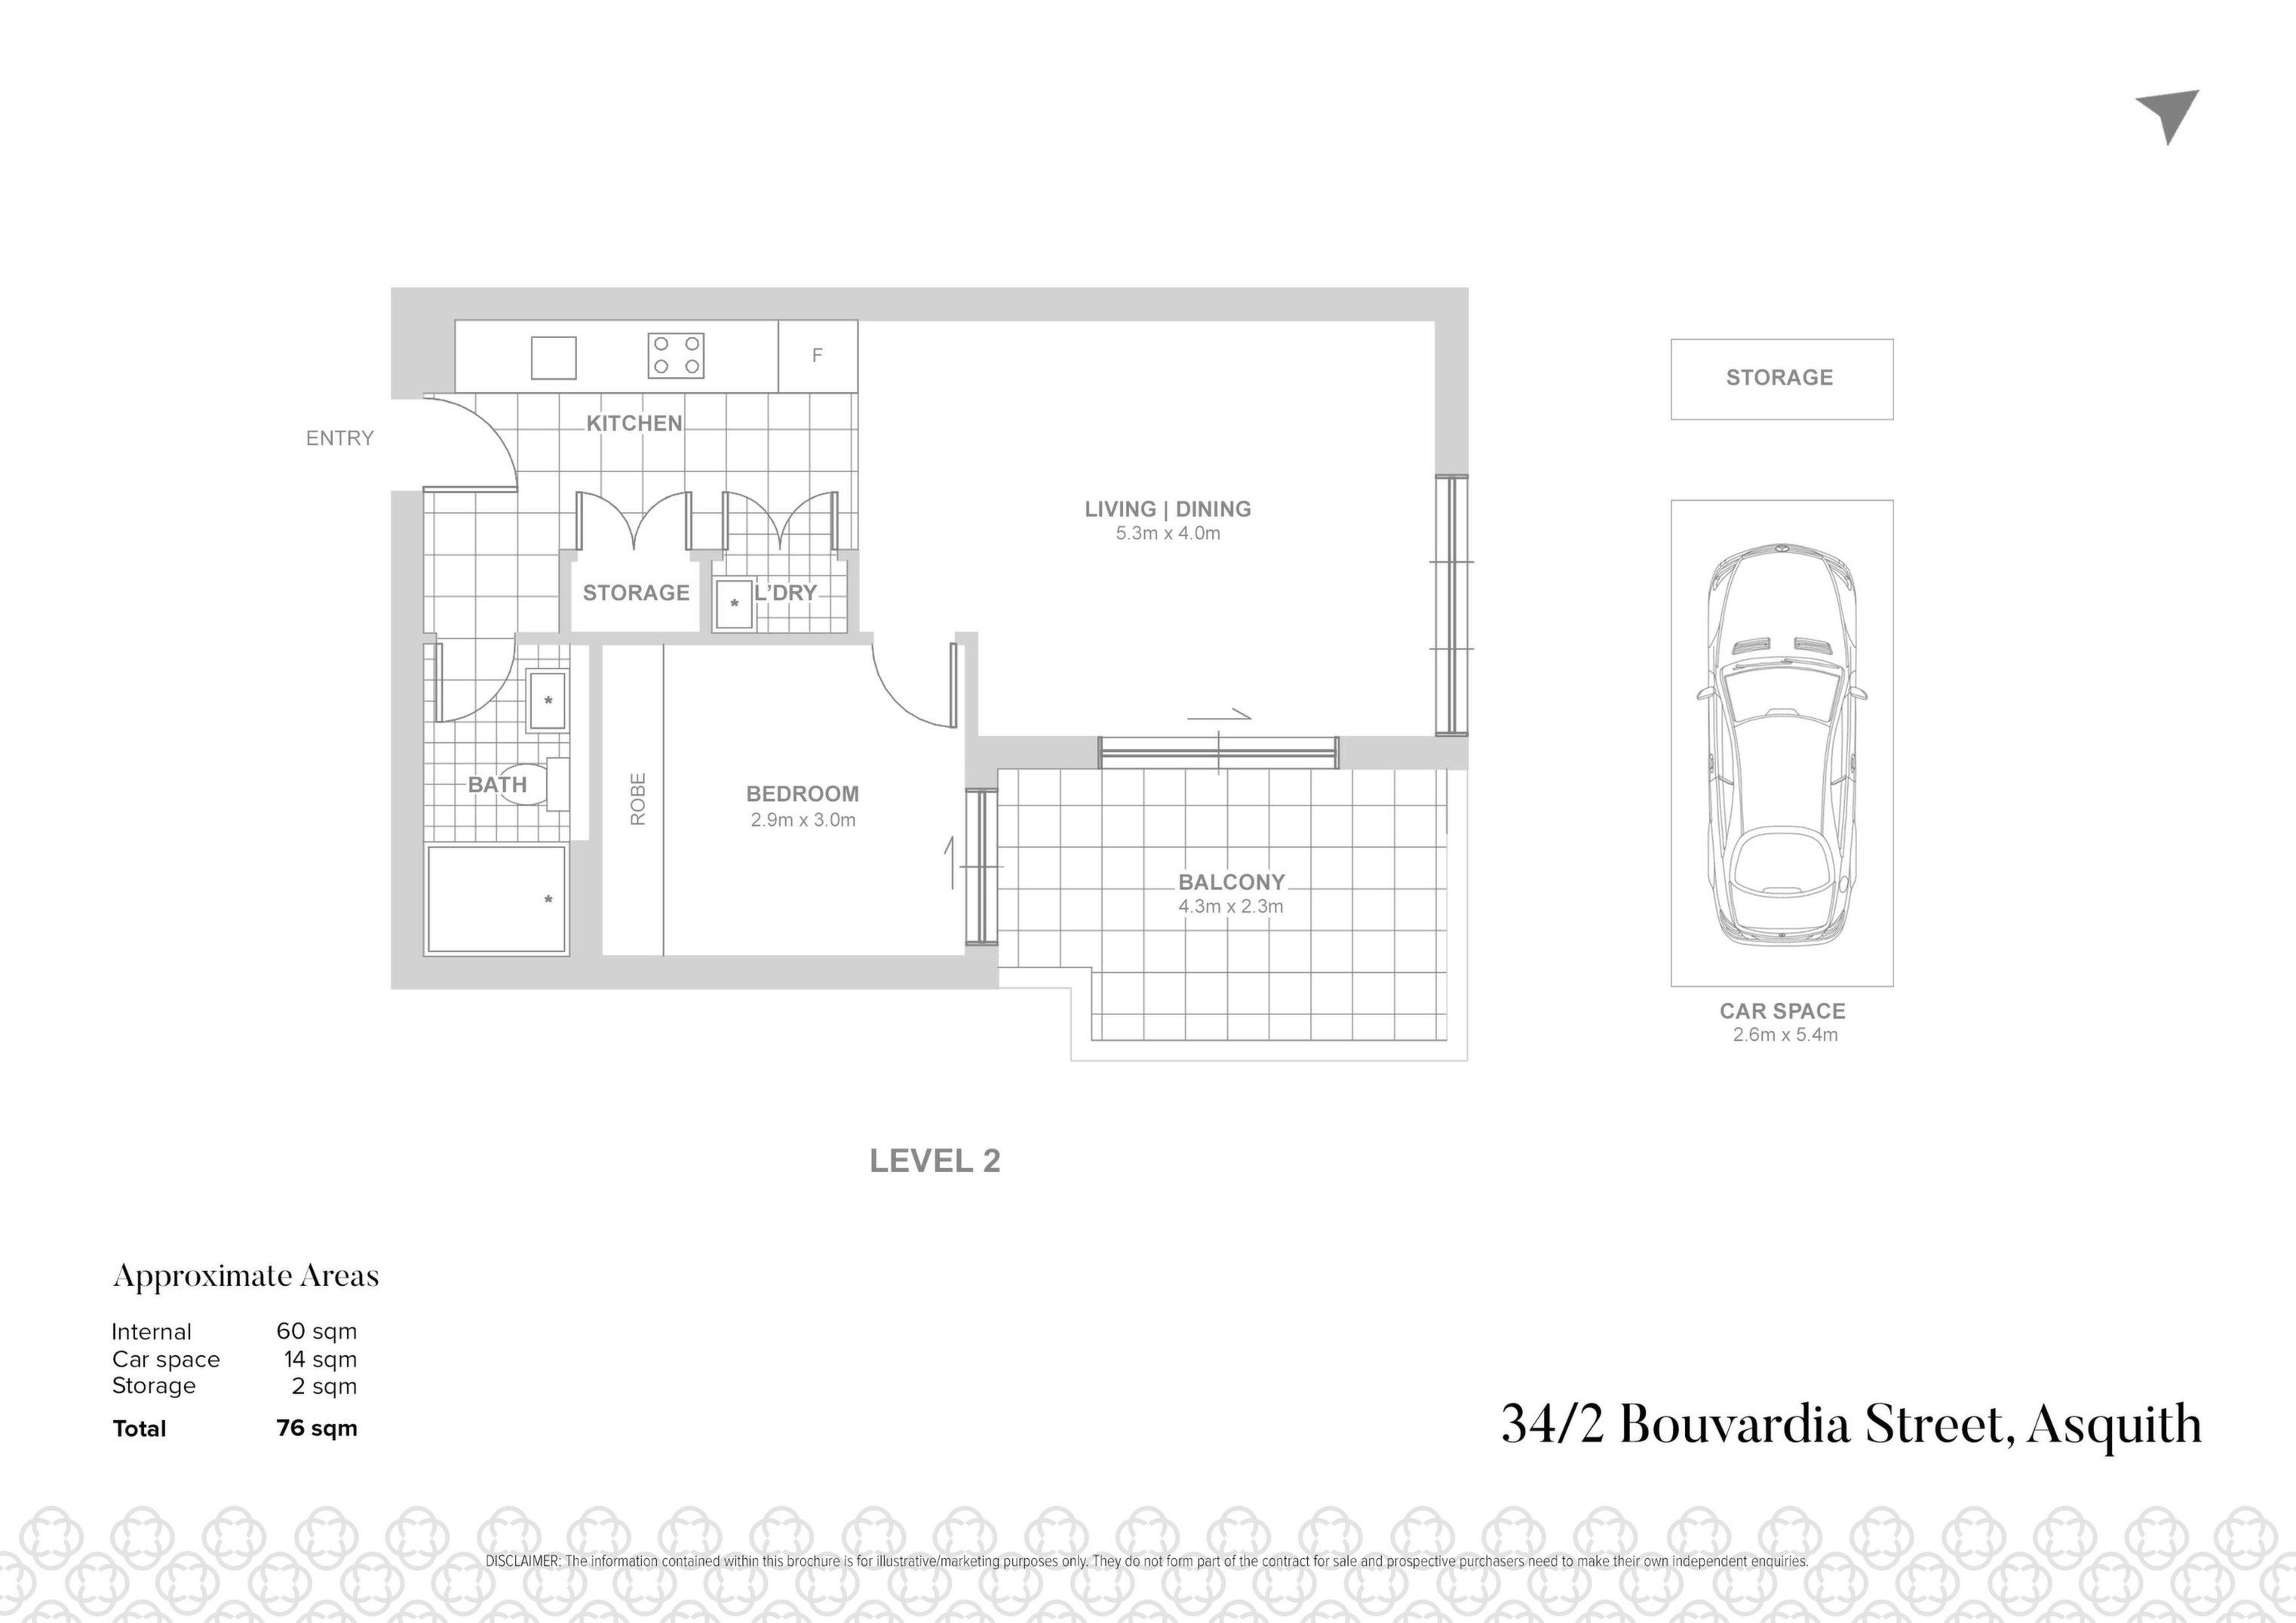 34/2 Bouvardia Street, Asquith Sold by Chidiac Realty - floorplan